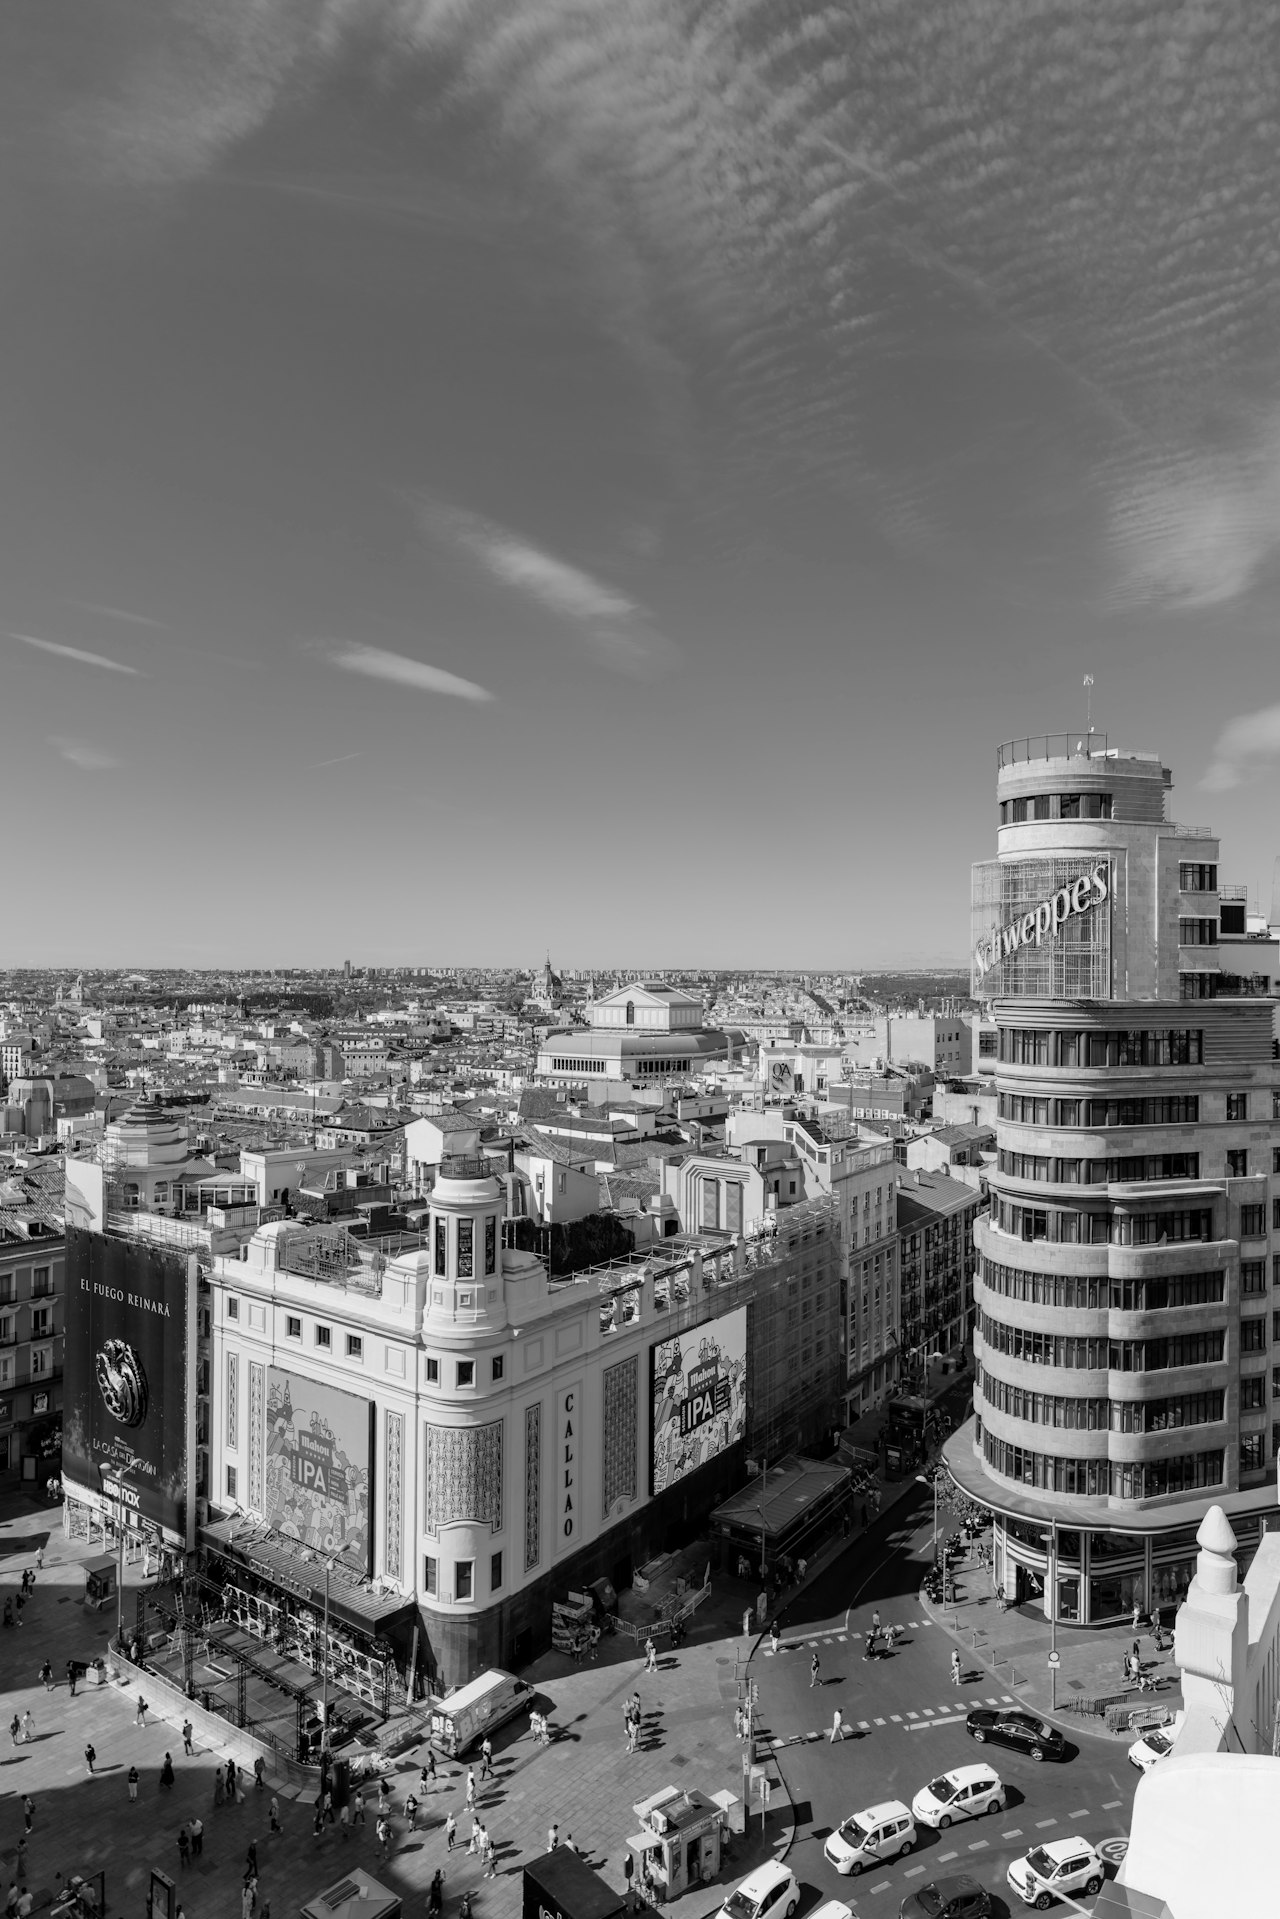 Gran vía Madrid with a large building